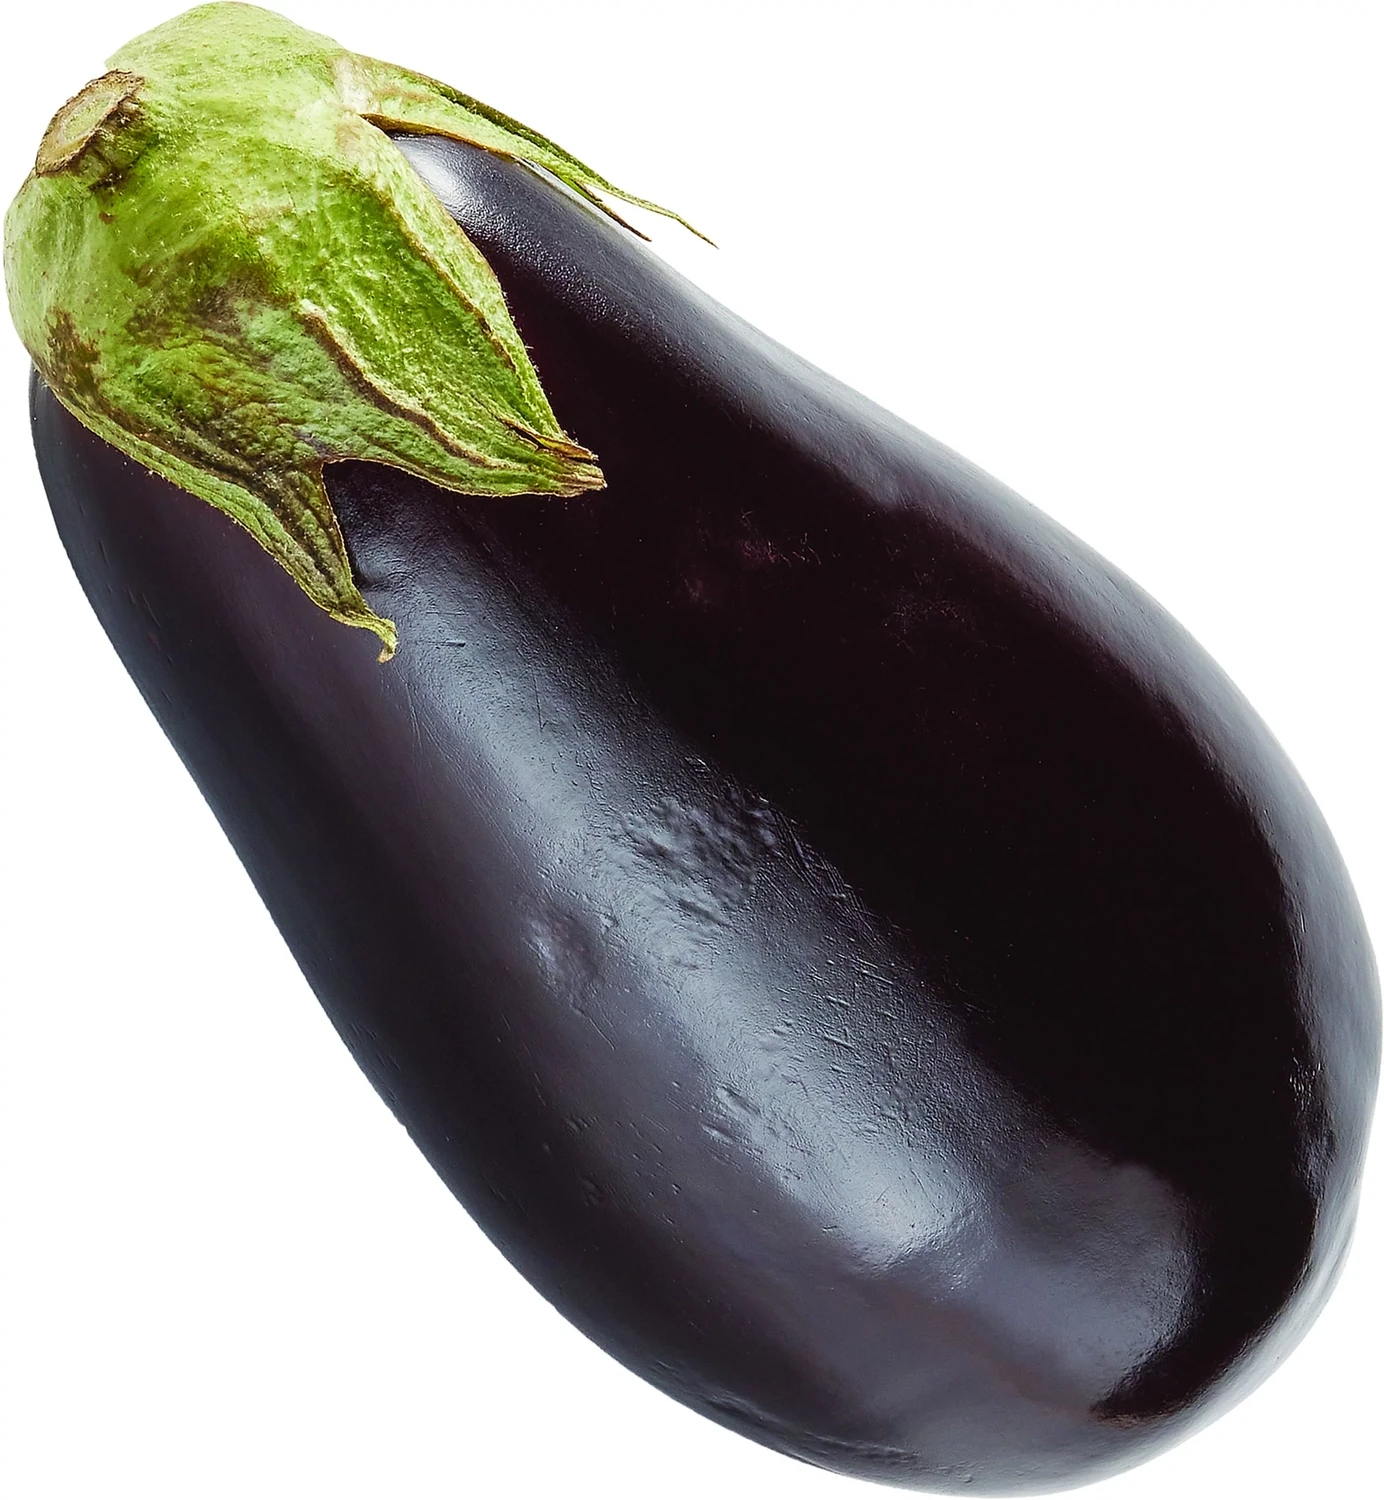 Eggplant- each